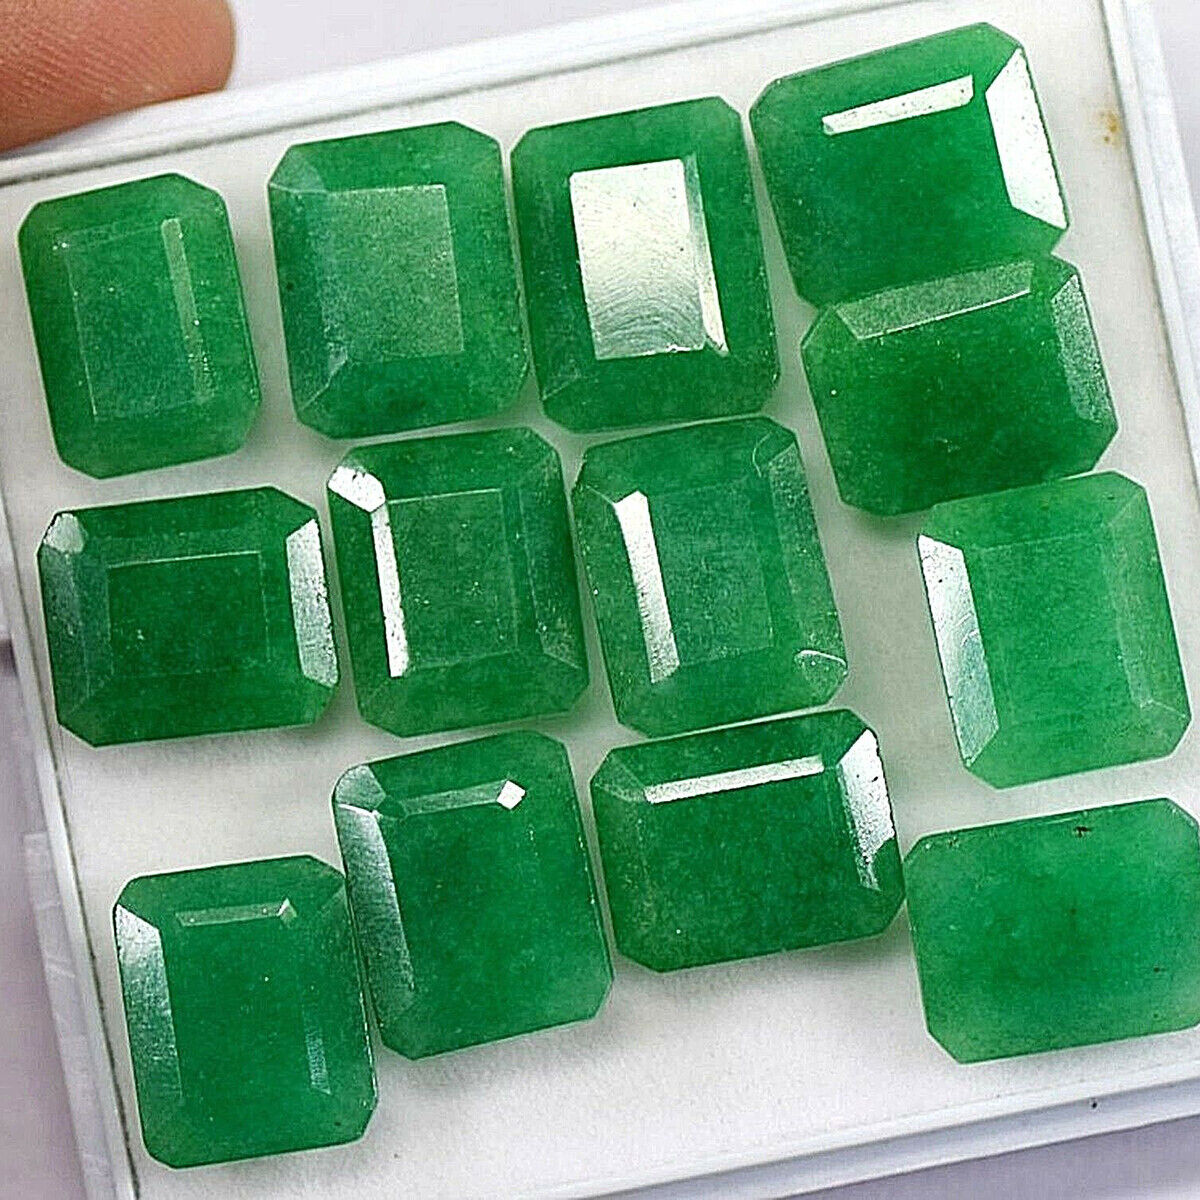 Faceted Zambian Genuine Green Emerald Cut Loose Gemstone 160.00 Ct./13 Pcs Lot Clearopal